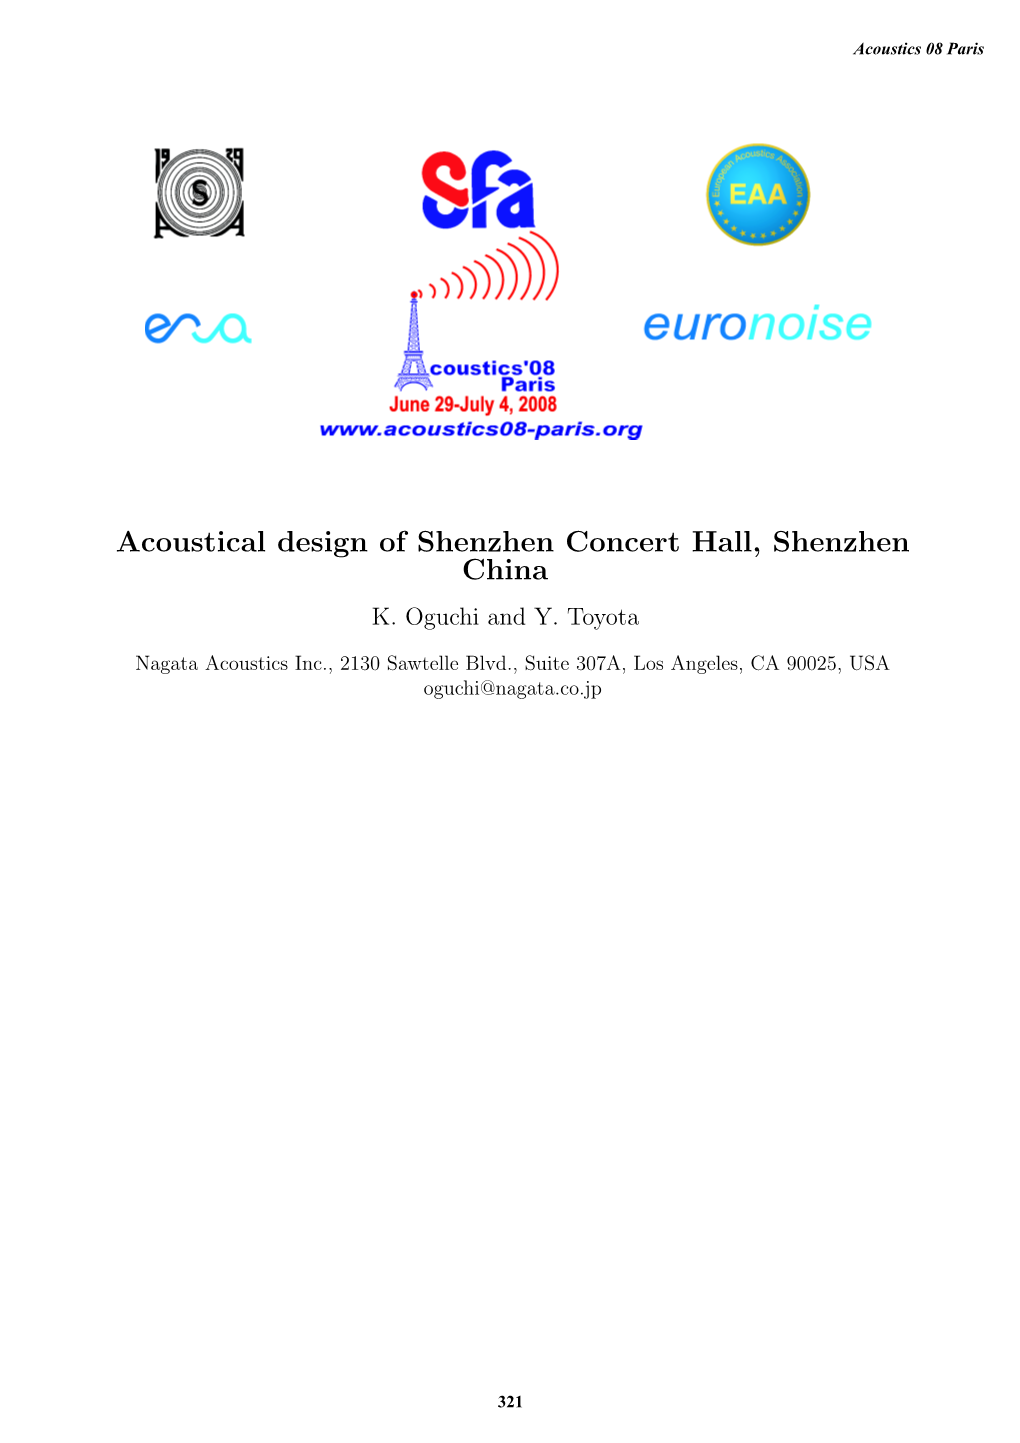 Acoustical Design of Shenzhen Concert Hall, Shenzhen China K